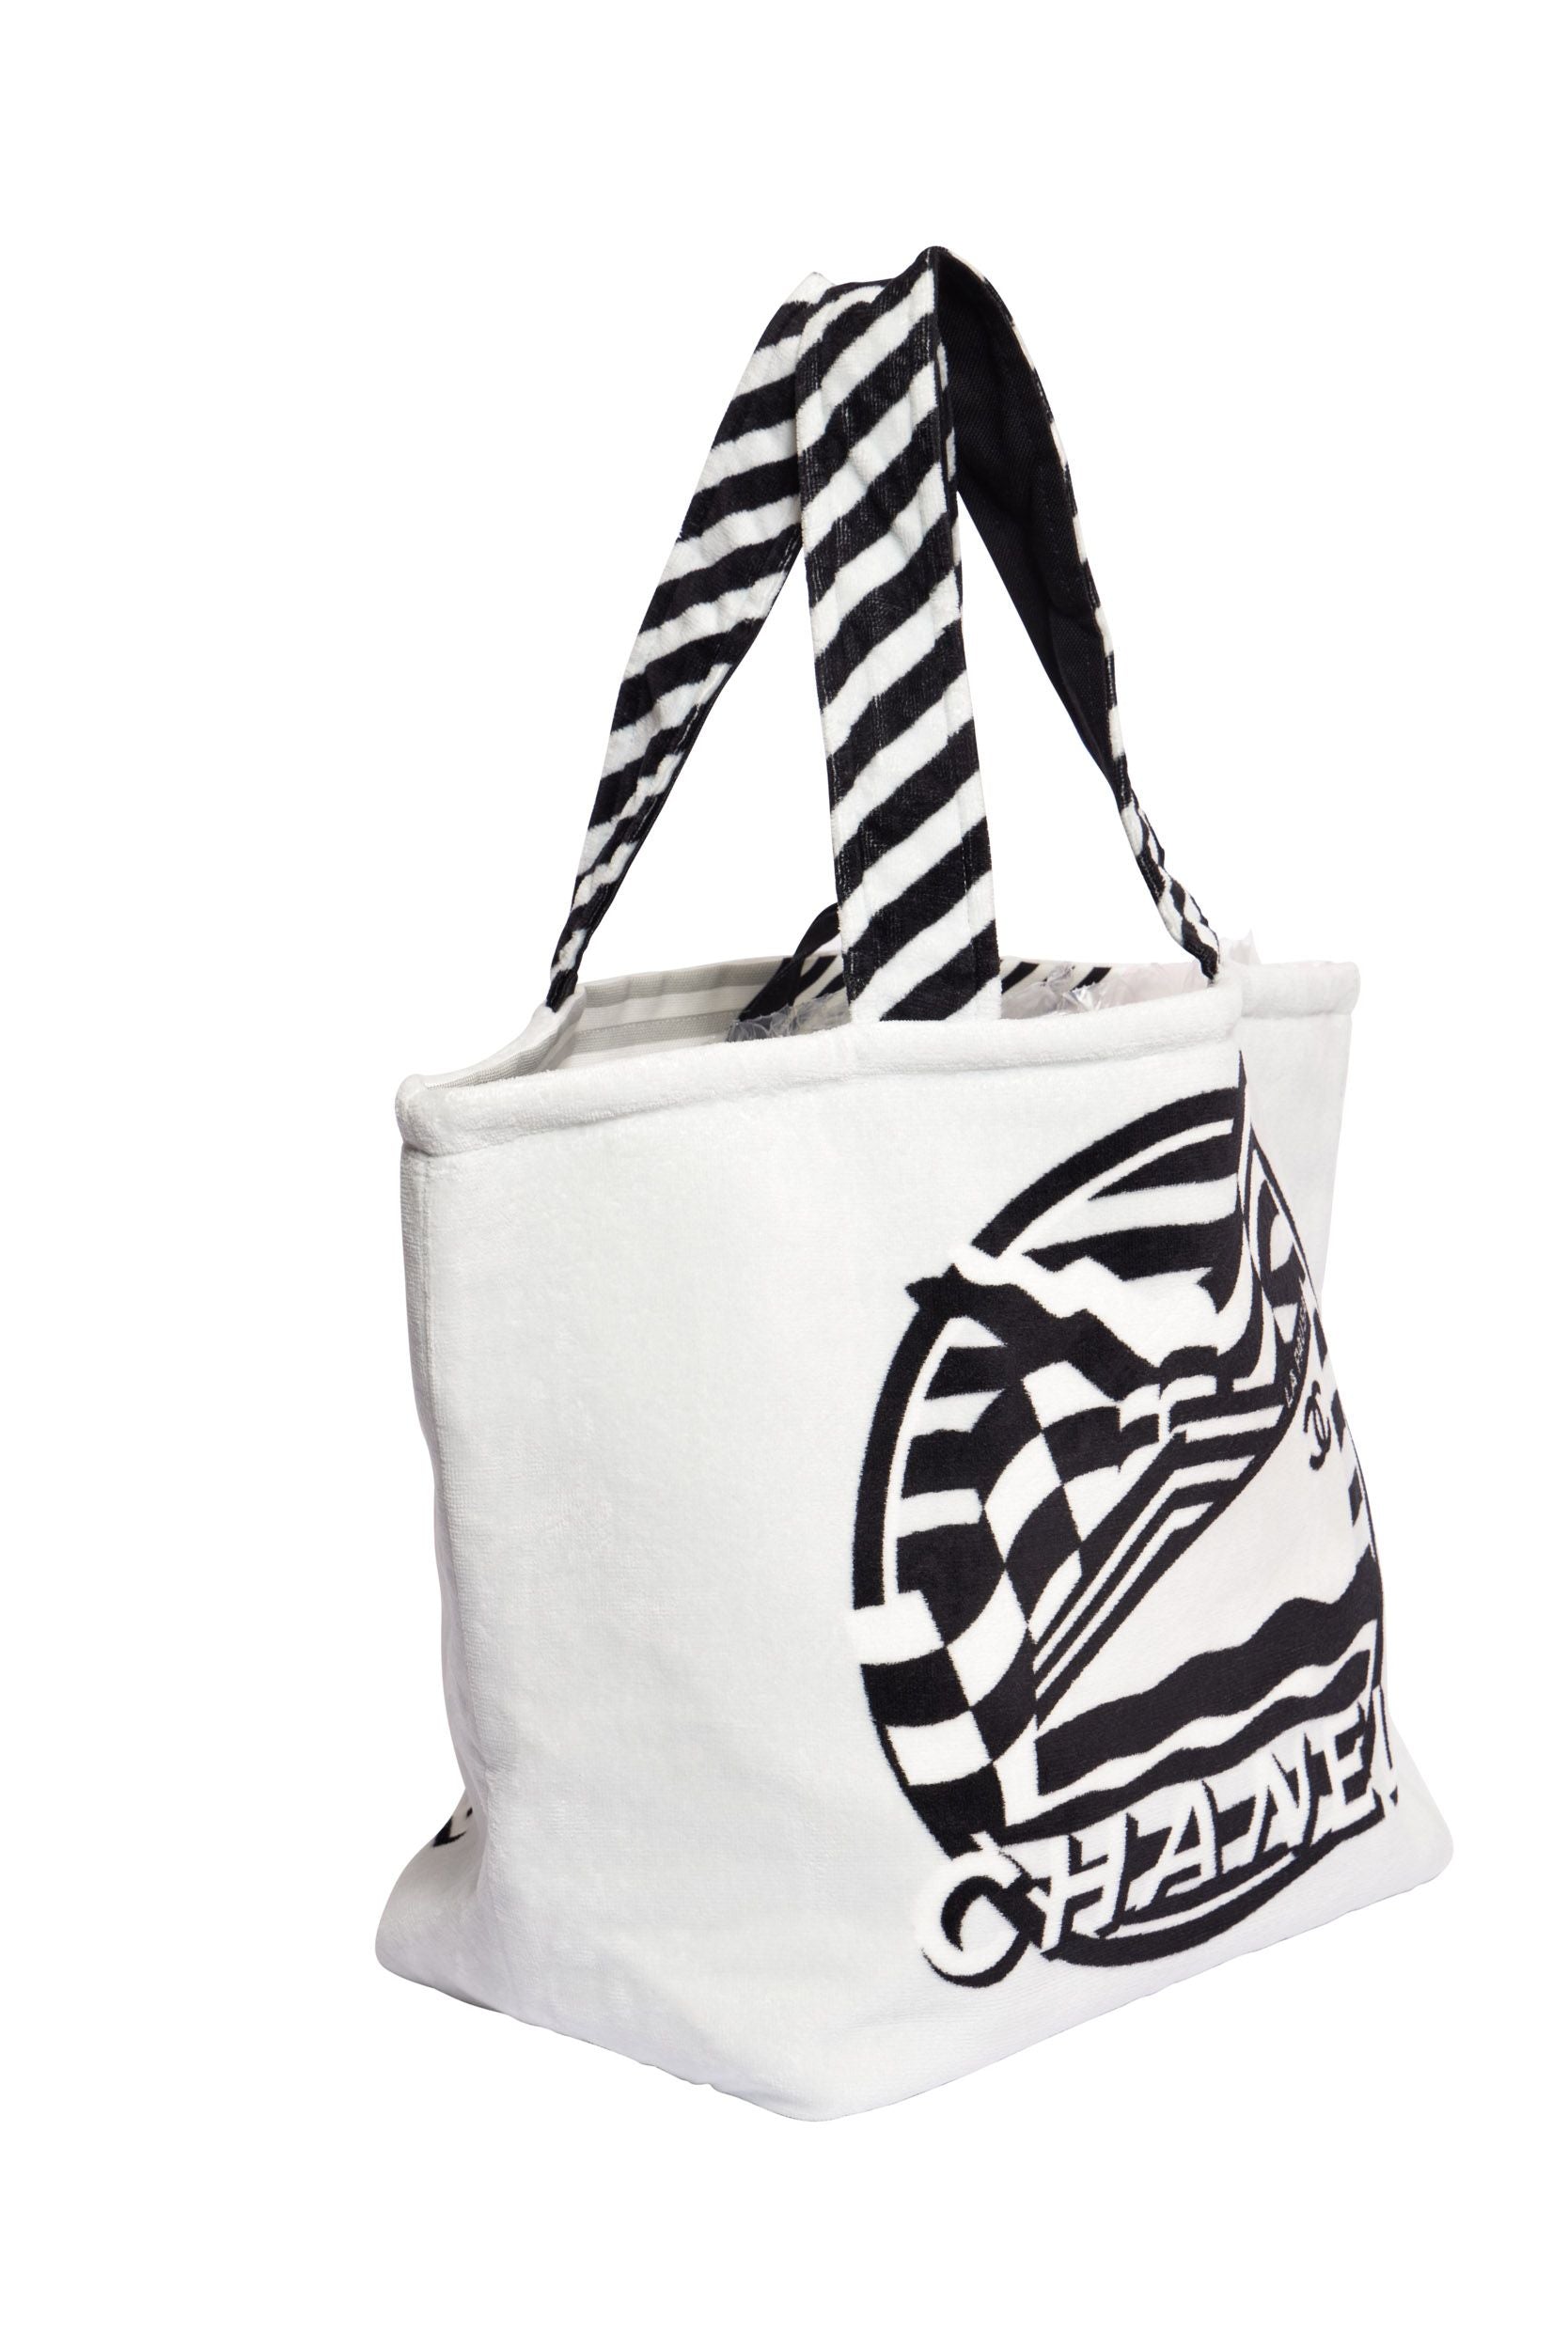 Chanel La Pausa Tote Purse Bag Canvas 2019 Cruise Collection Pink Black &  White 